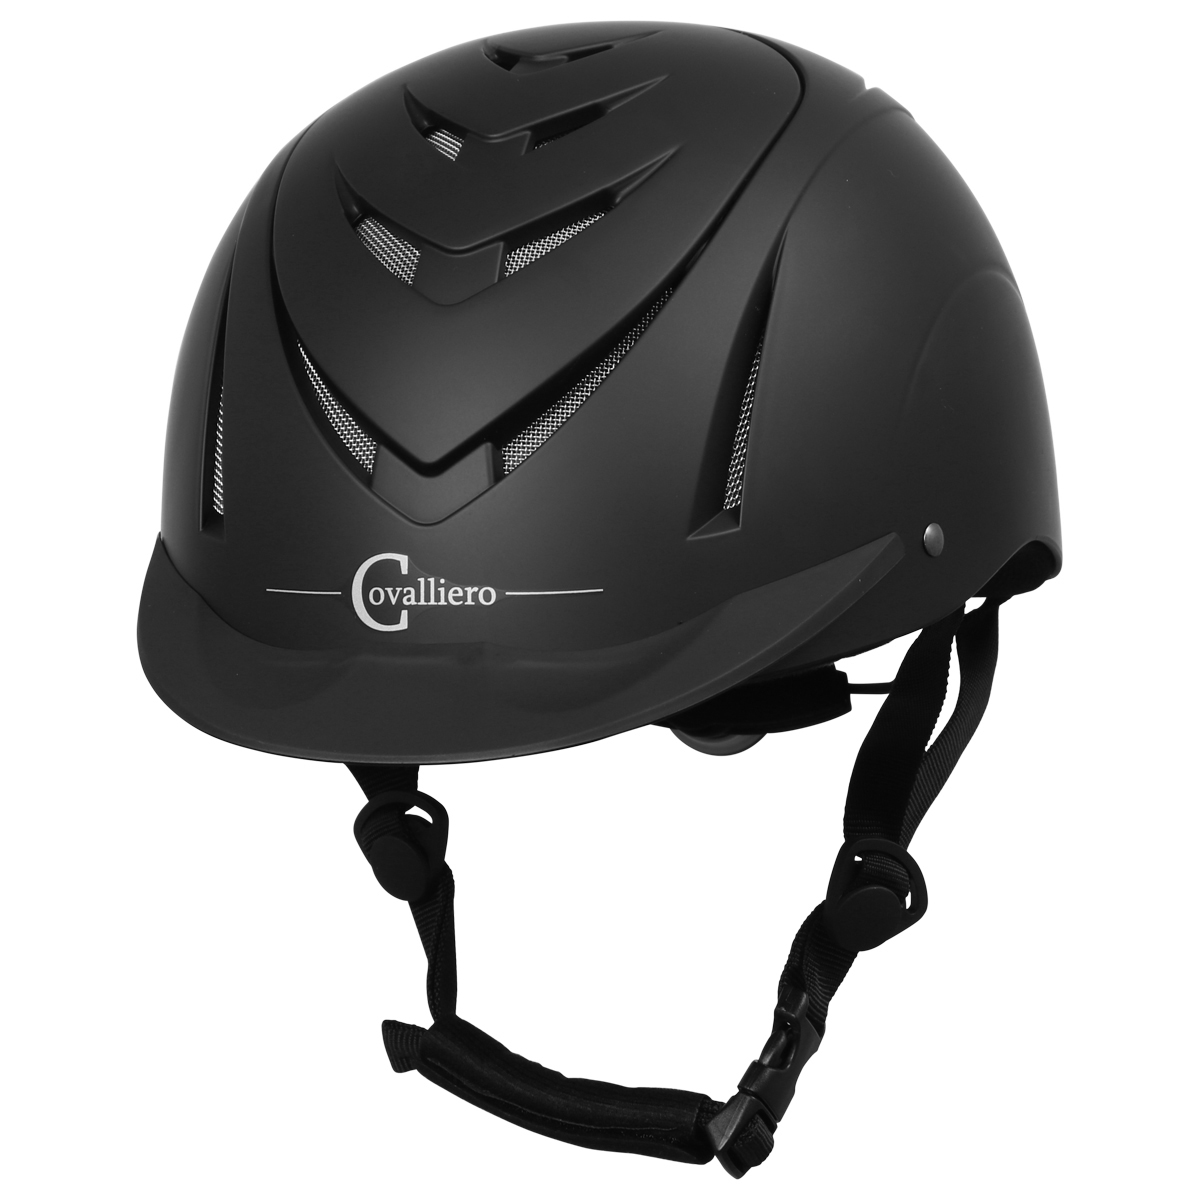 Covalliero Riding Helmet Beauty VG1 Safety Hat 52-55cm/53-57cm Black/Camel 